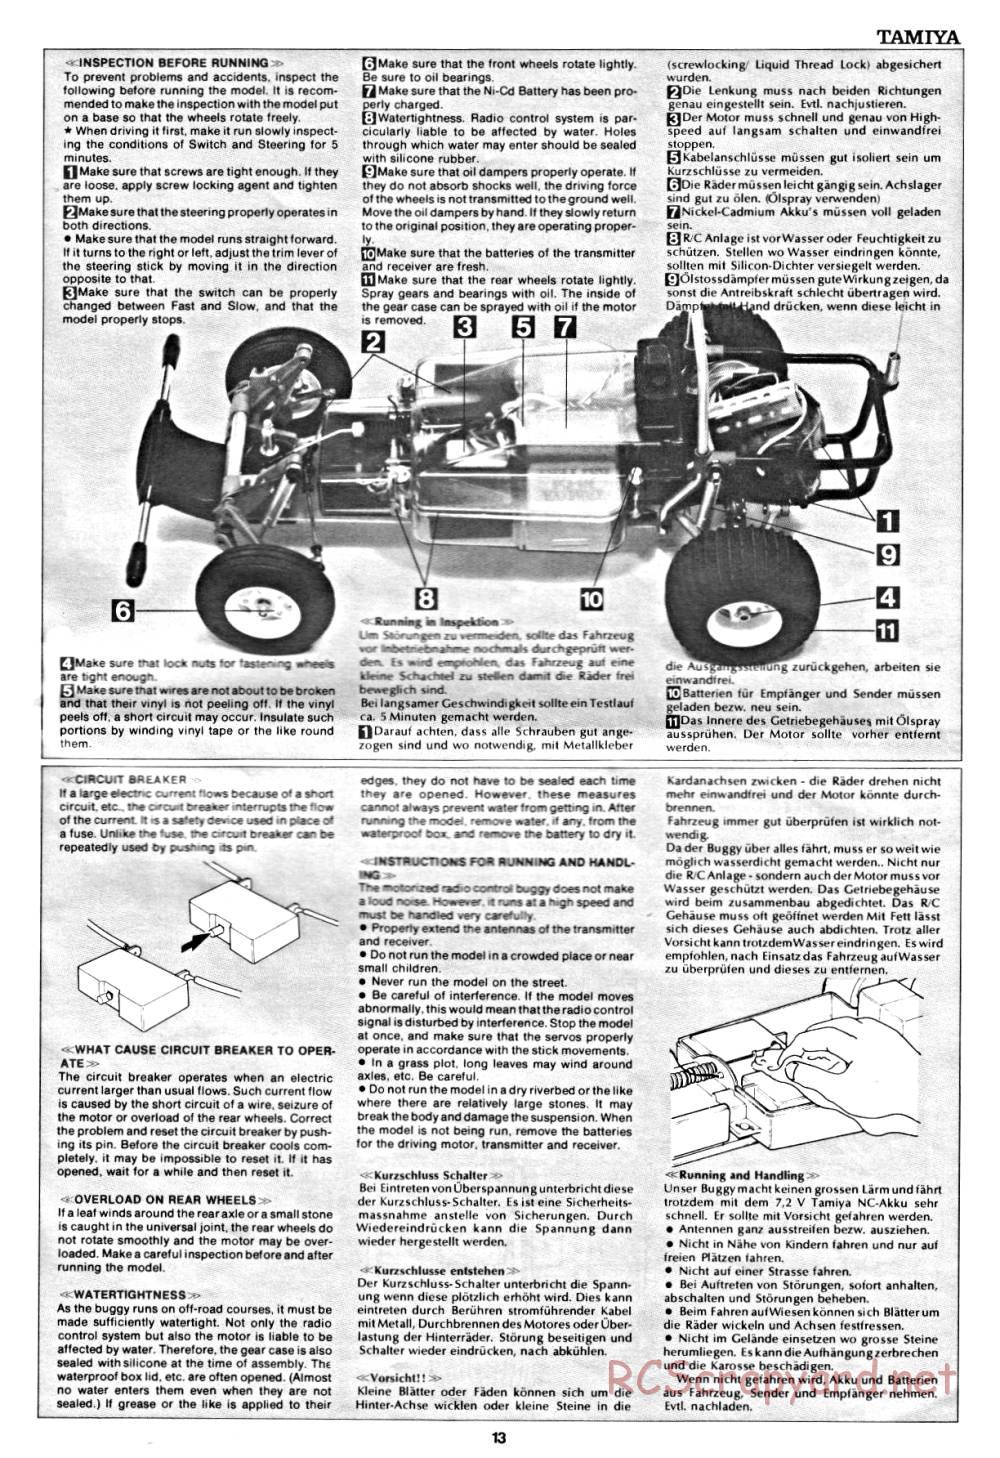 Tamiya - Sand Scorcher - 58016 - Manual - Page 13